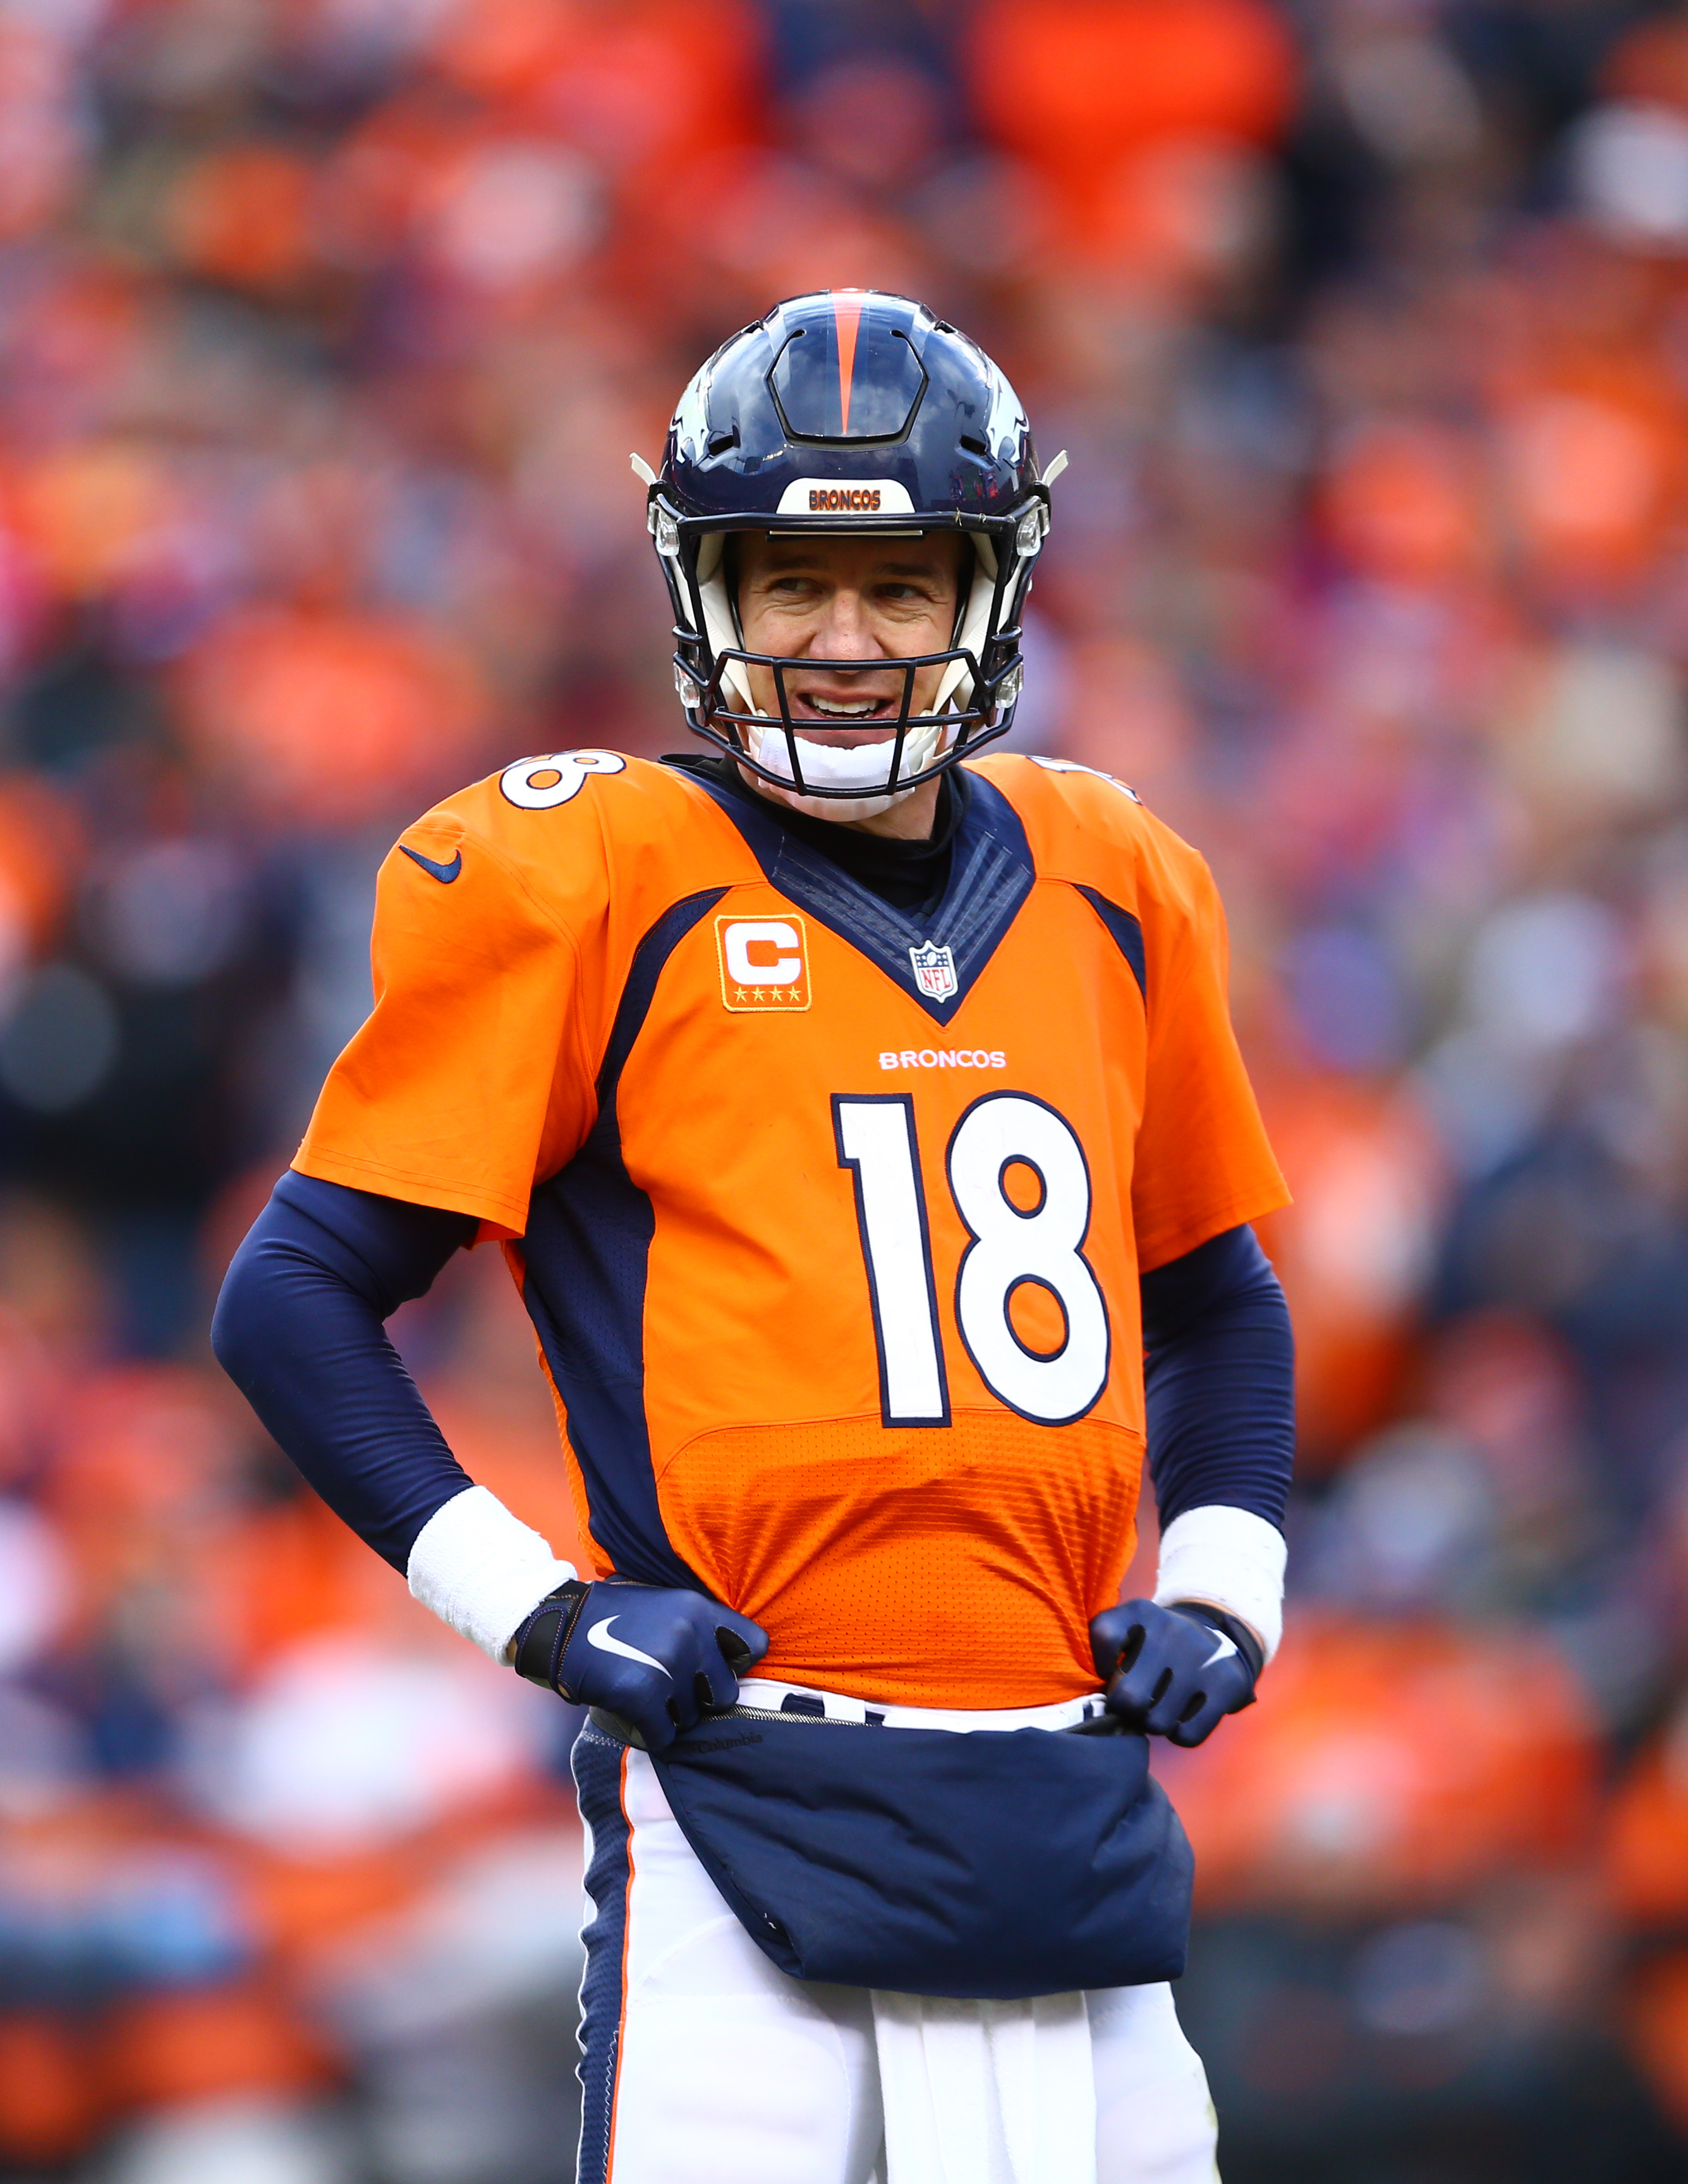 Latest On Broncos Ownership, Peyton Manning's Involvement